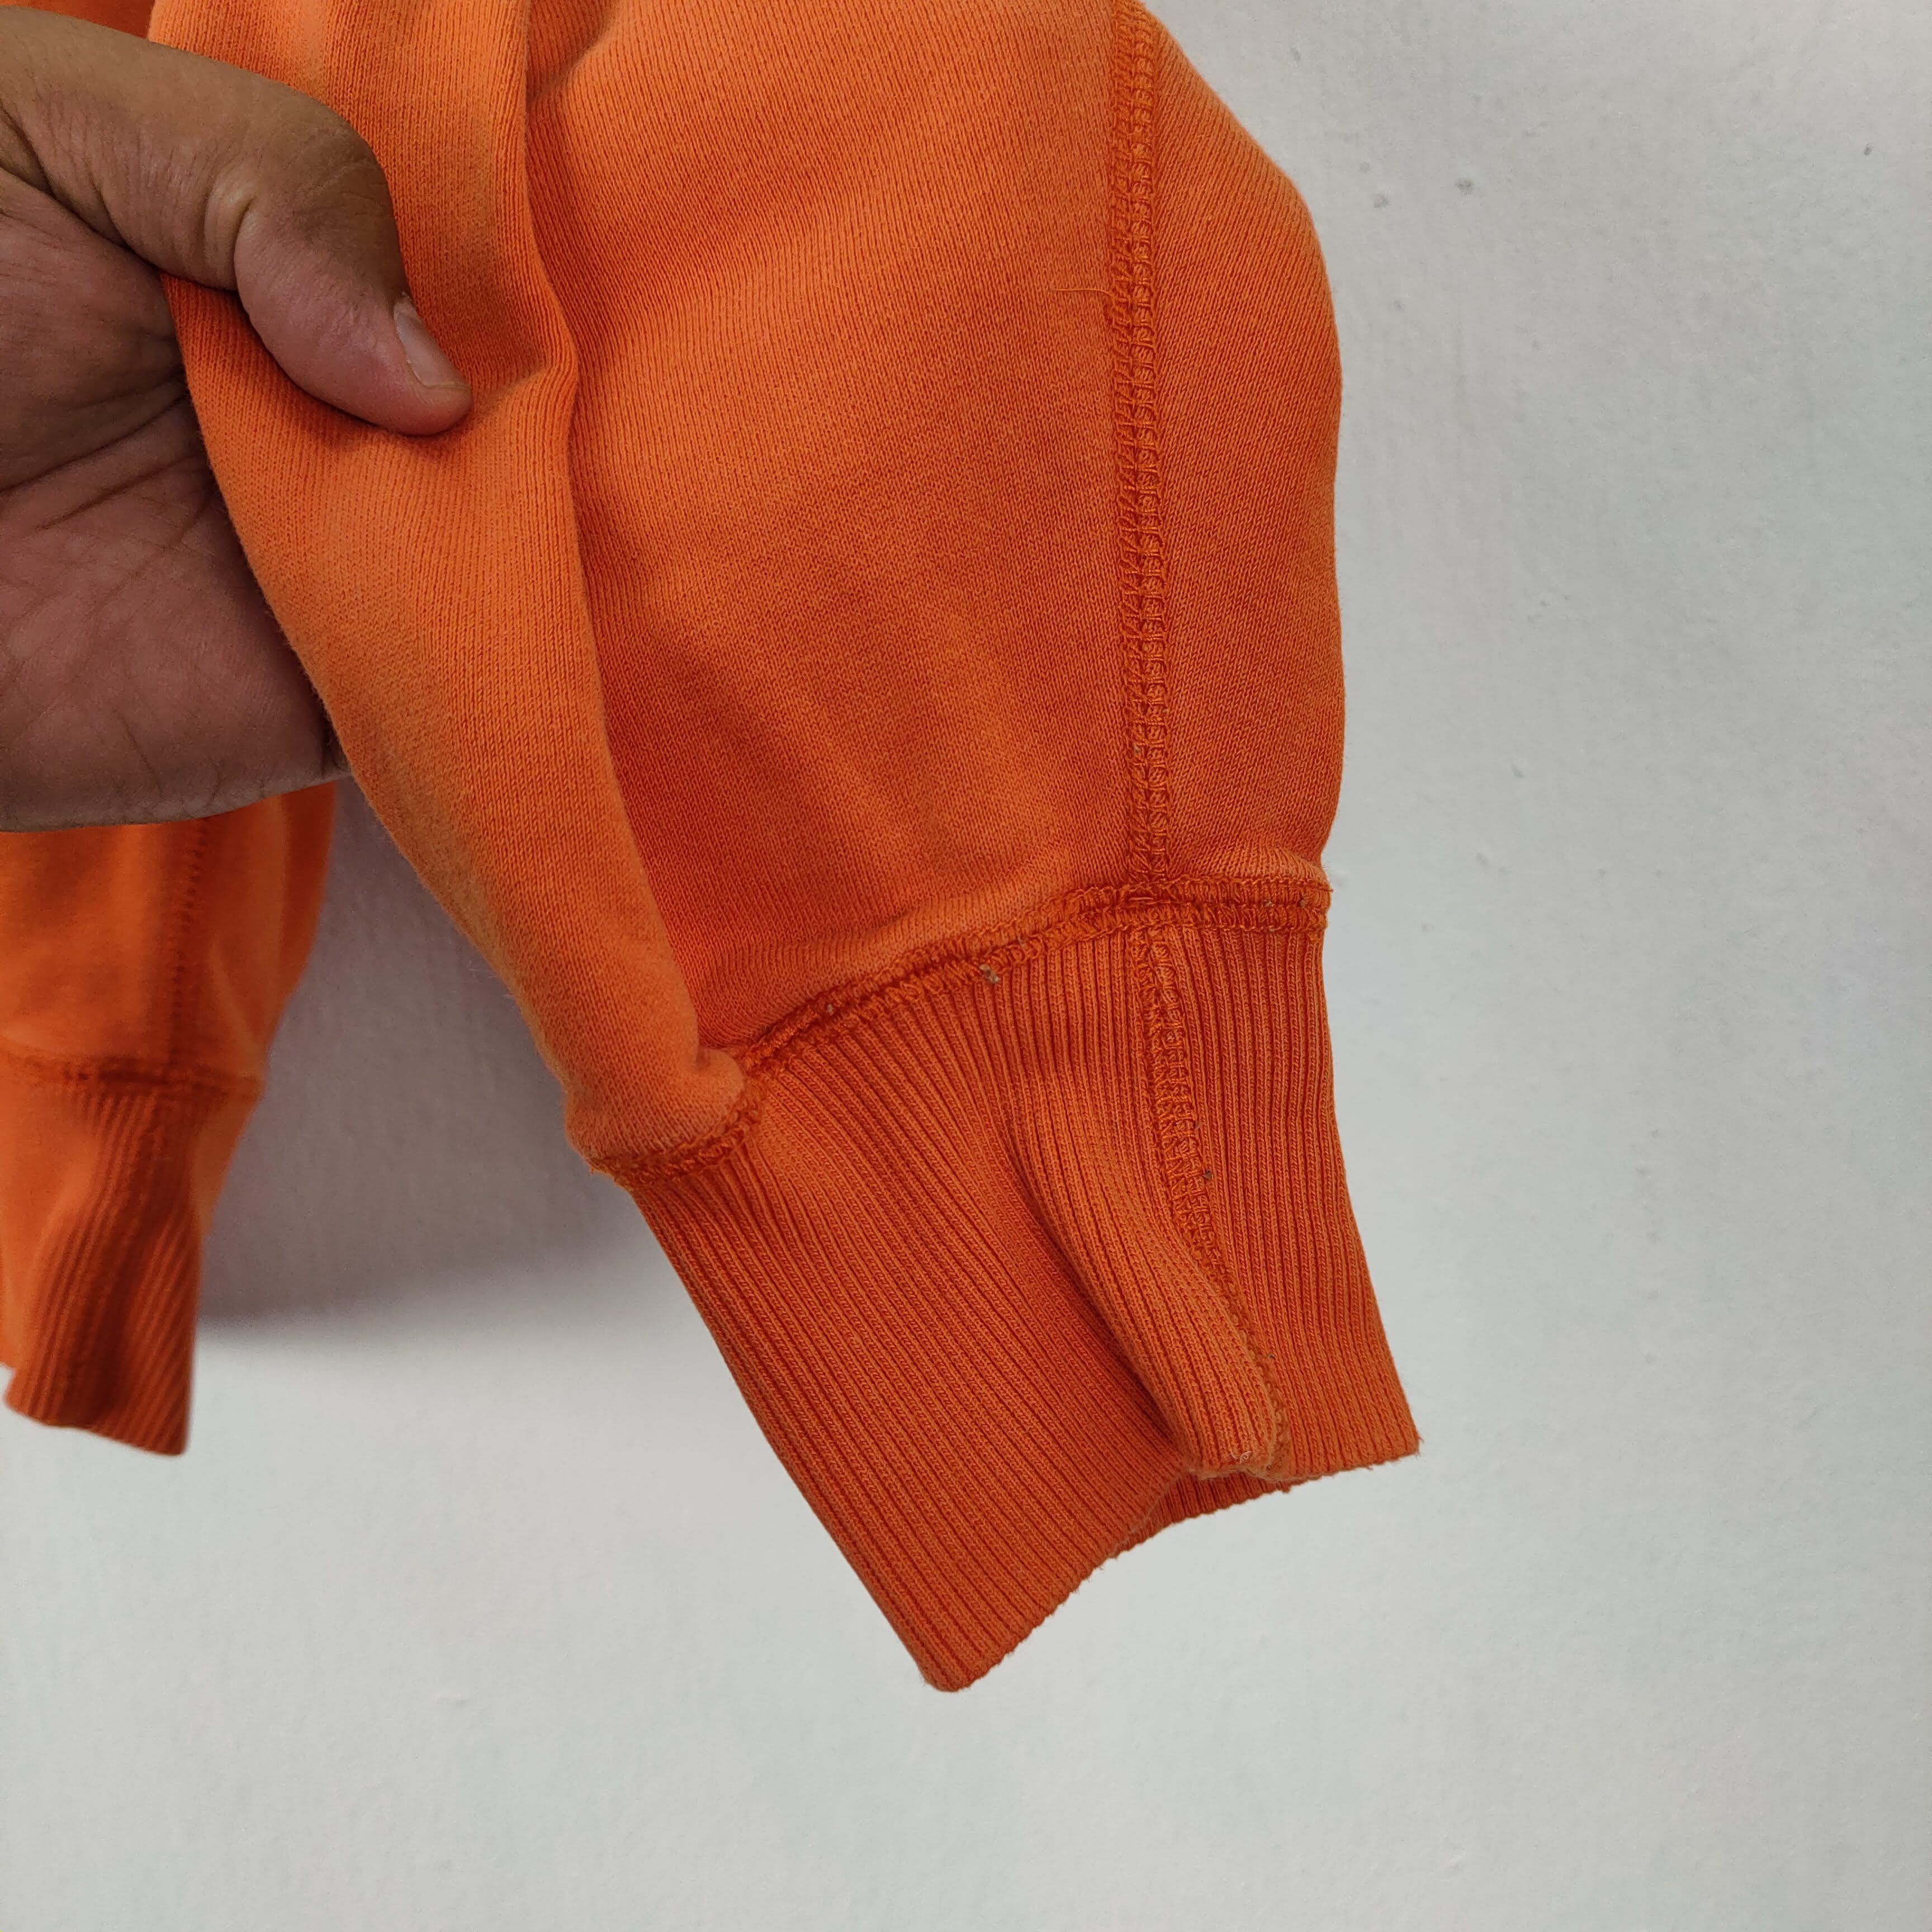 Uniqlo Uniqlo Orange Plain Sweatshirt niqlo Size US XL / EU 56 / 4 - 4 Thumbnail